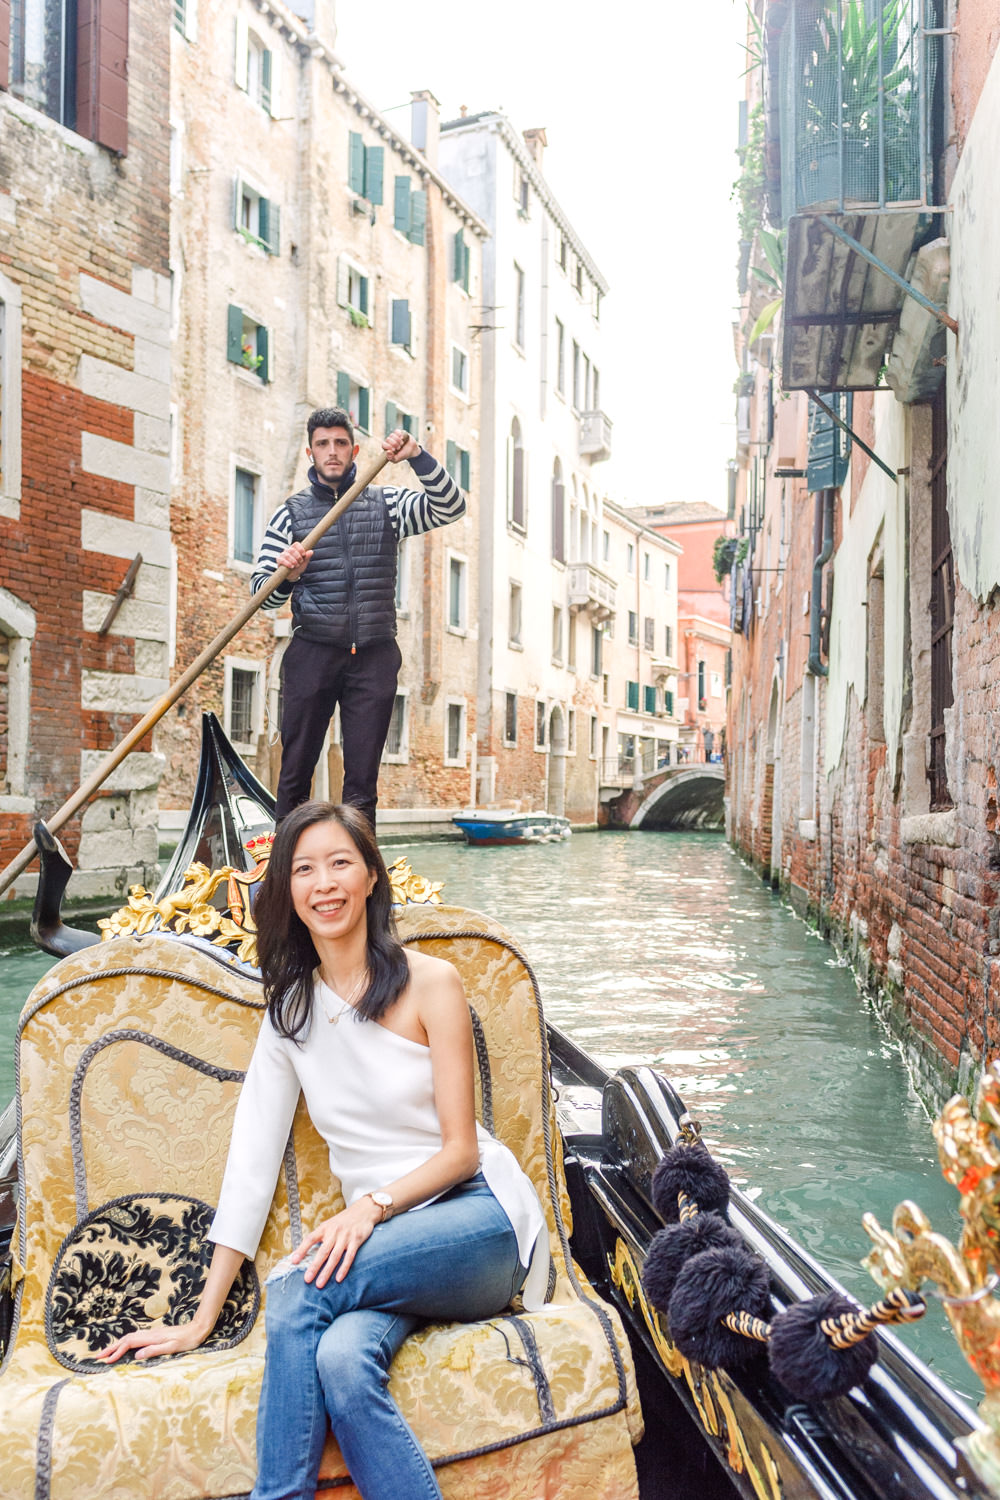 Gondola ride along the Grand Canal in Venice, Italy